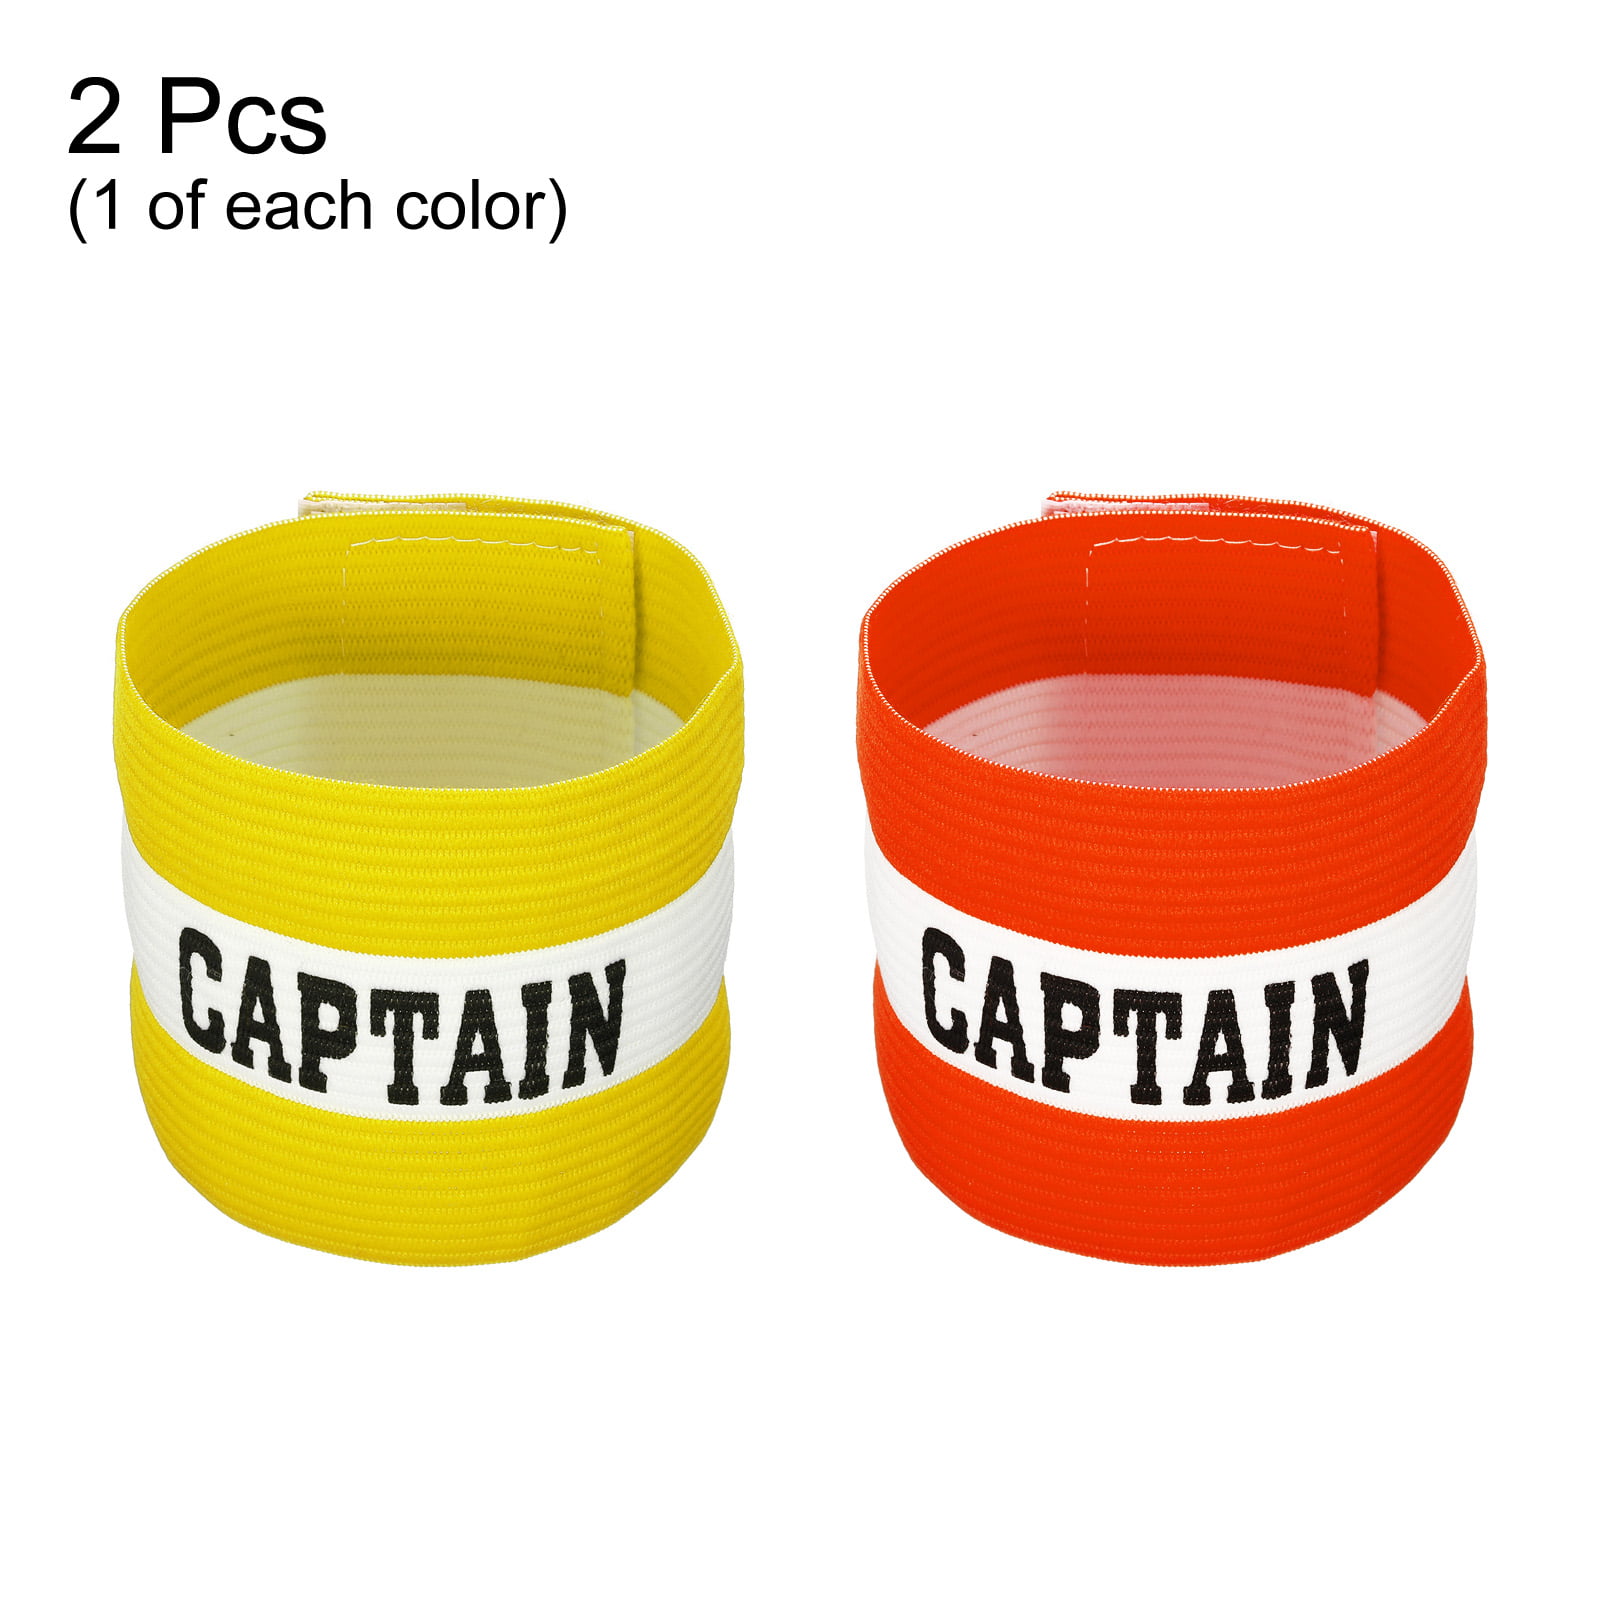 Frehsky tools CaptainS Bracelet, Elastic Captain's Armband For